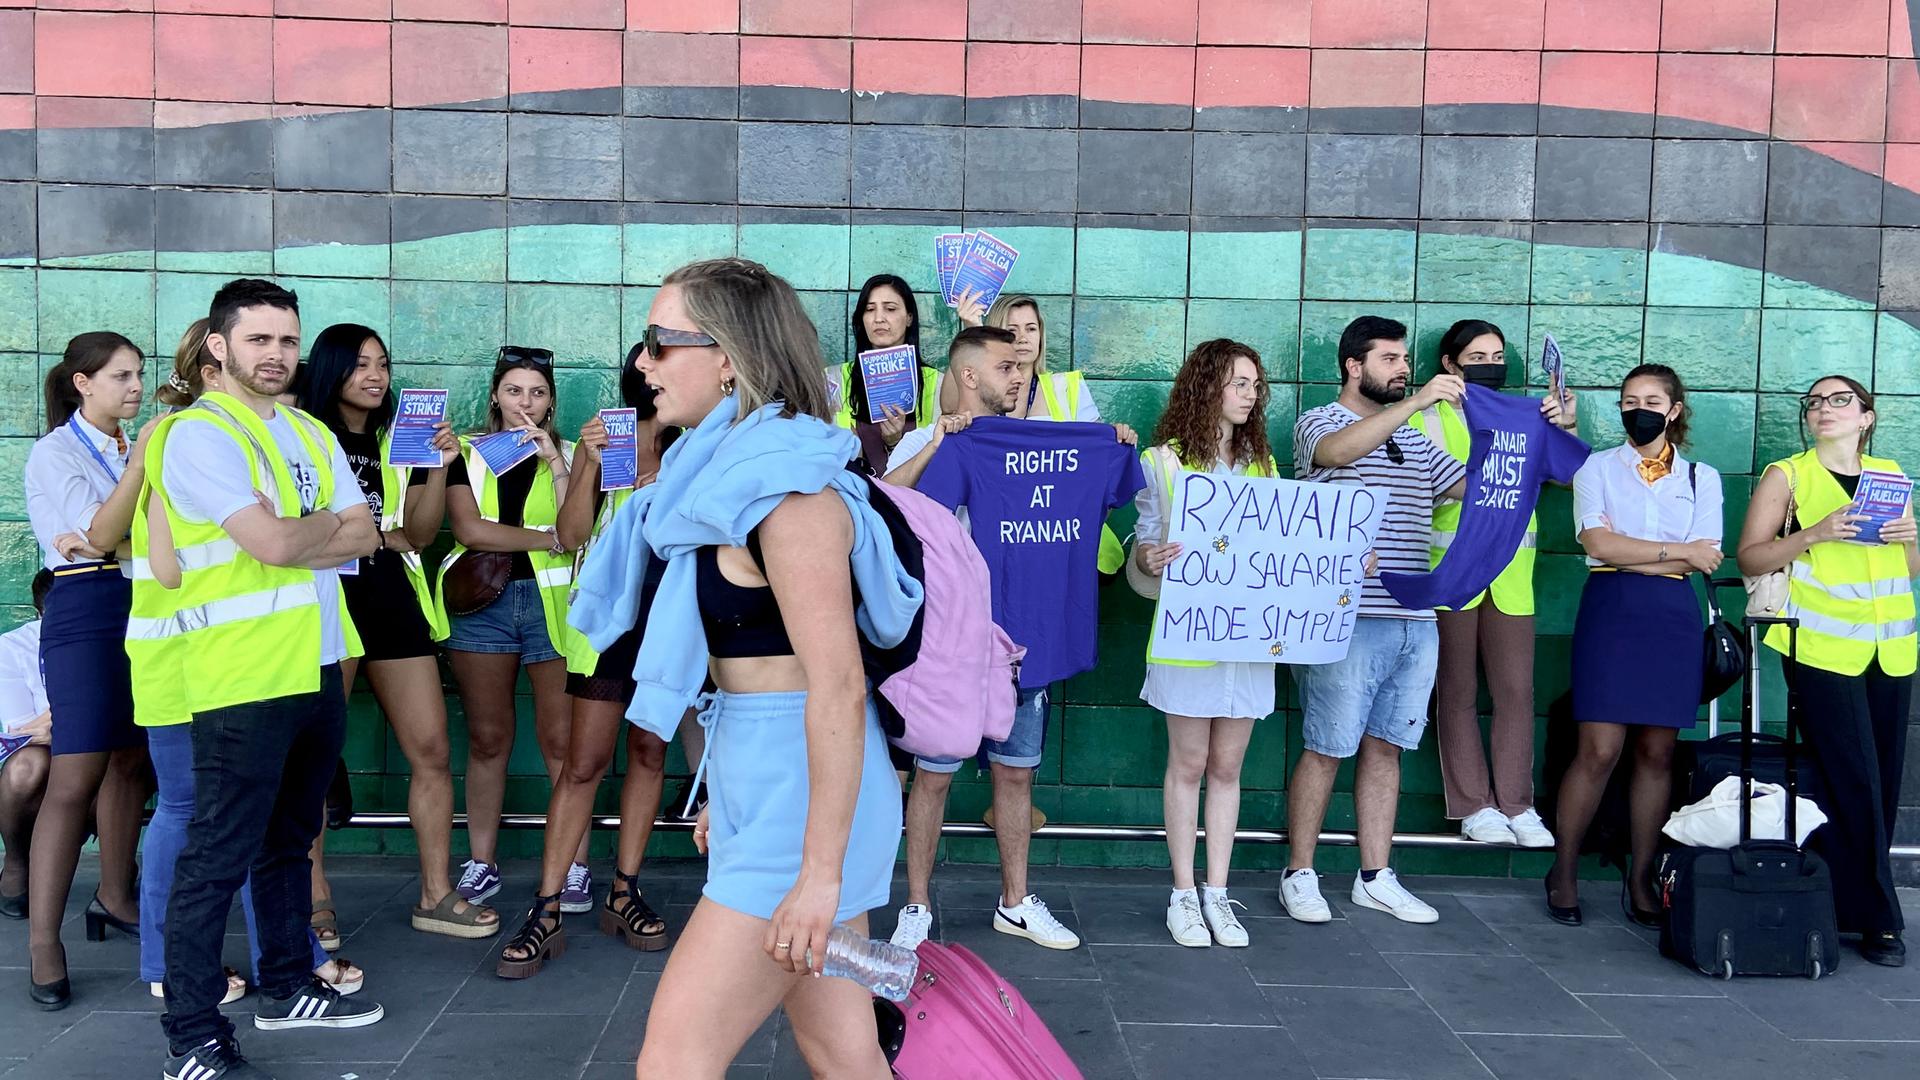 Ryanair strikers protest unfair working conditions, Barcelona, Spain. 